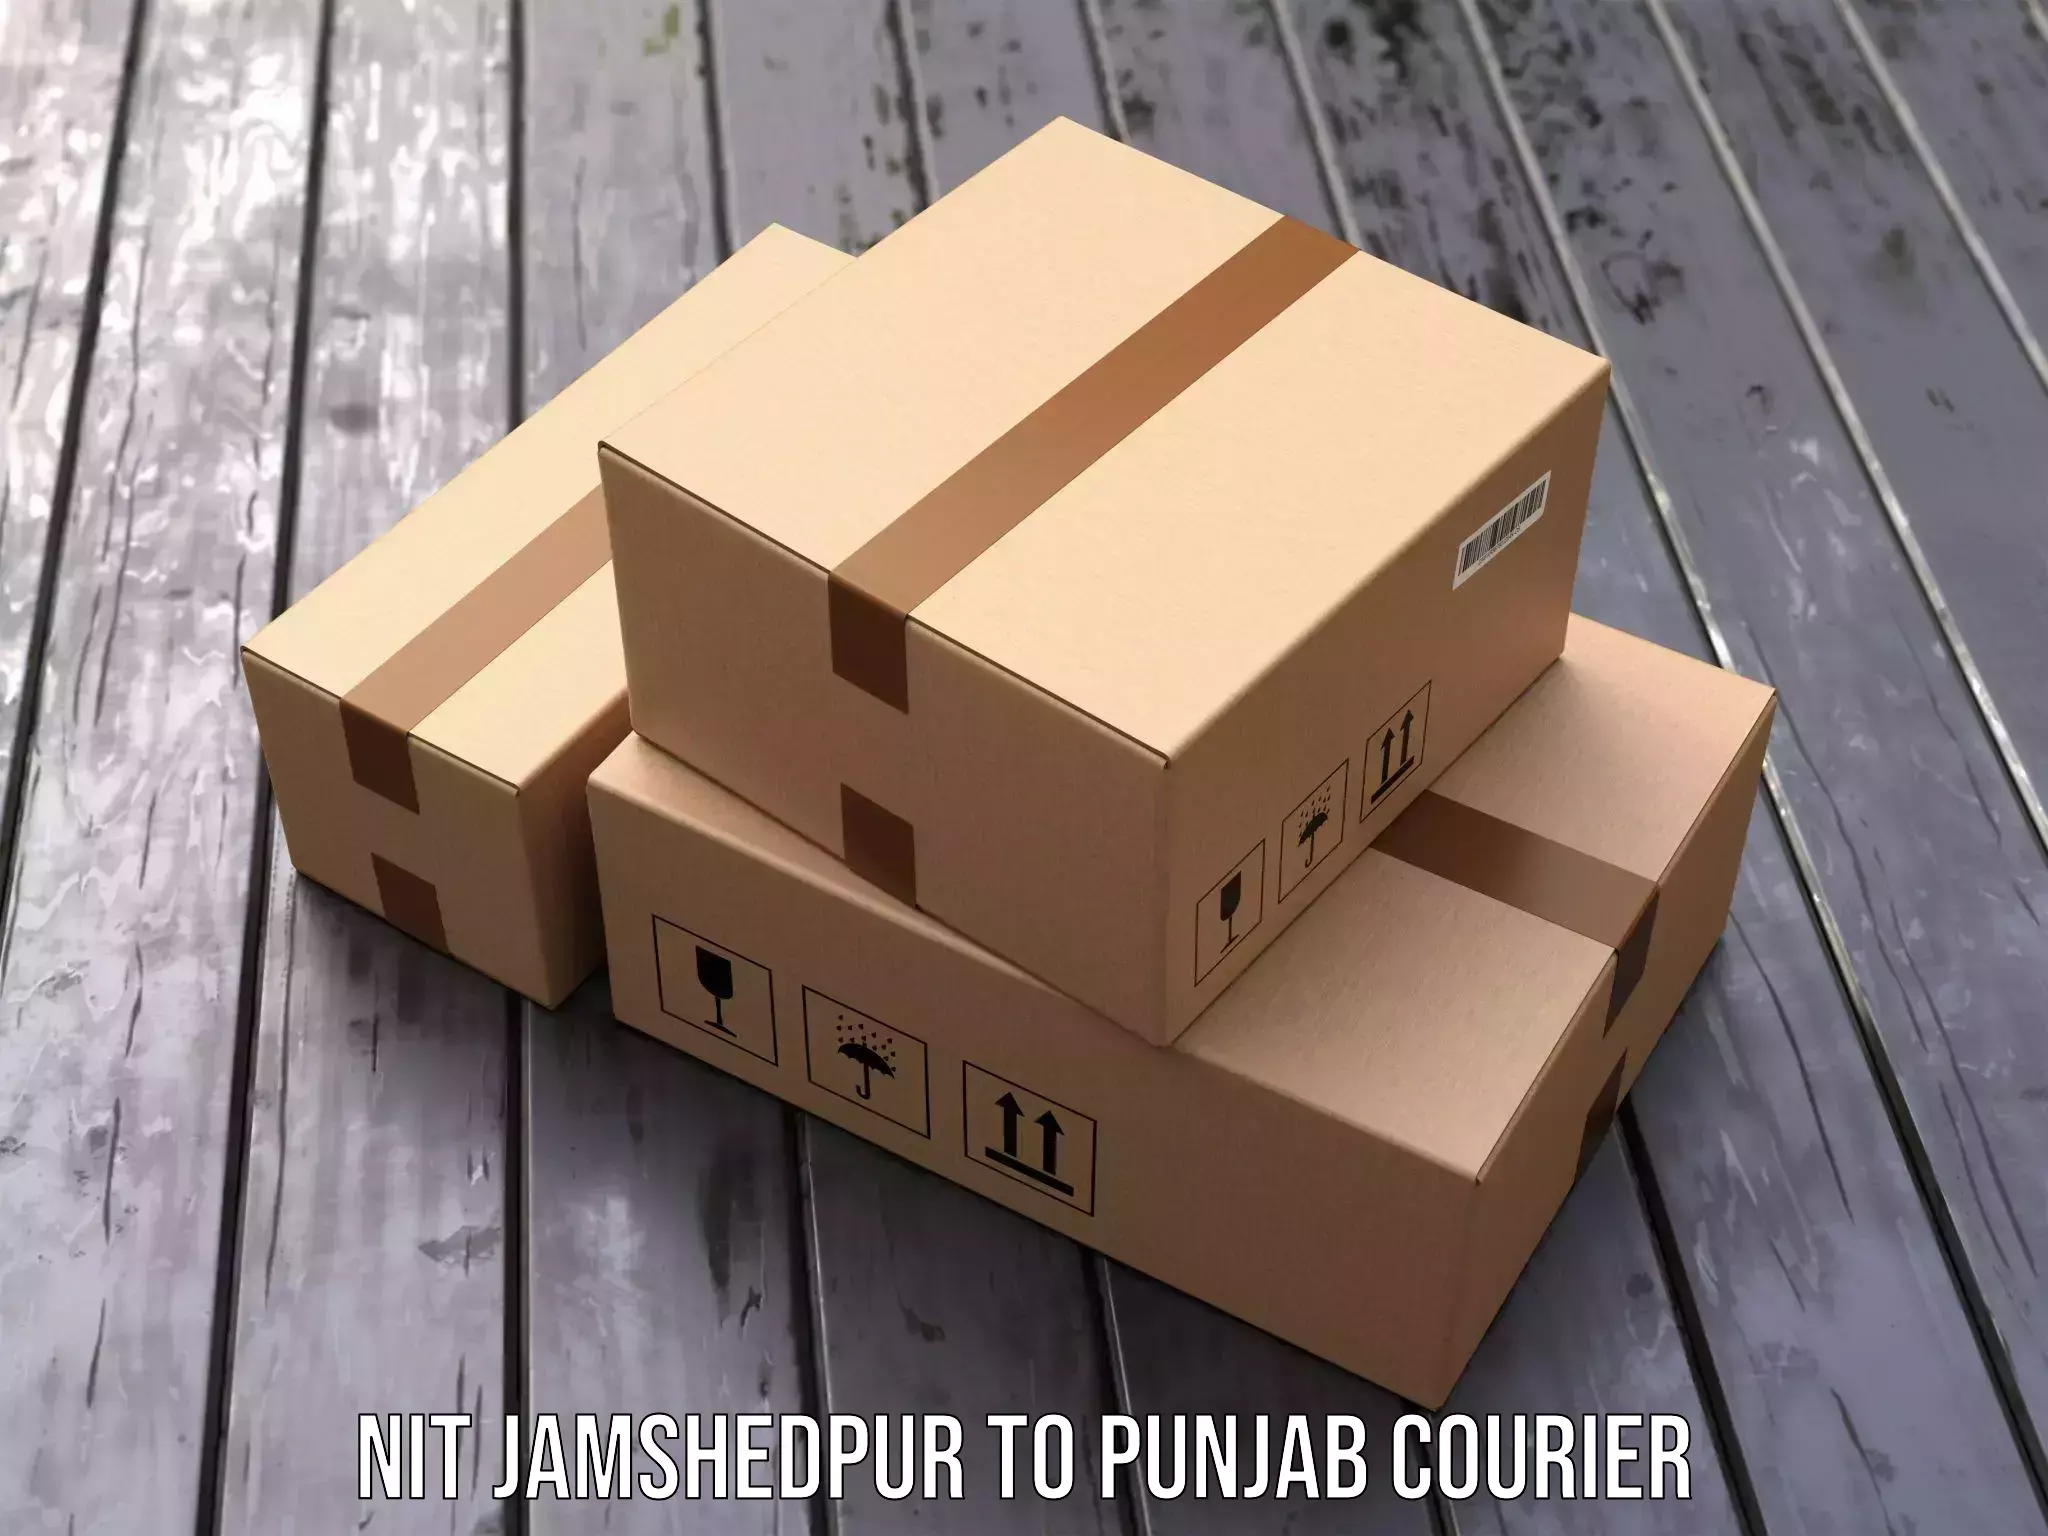 Courier membership NIT Jamshedpur to Mohali